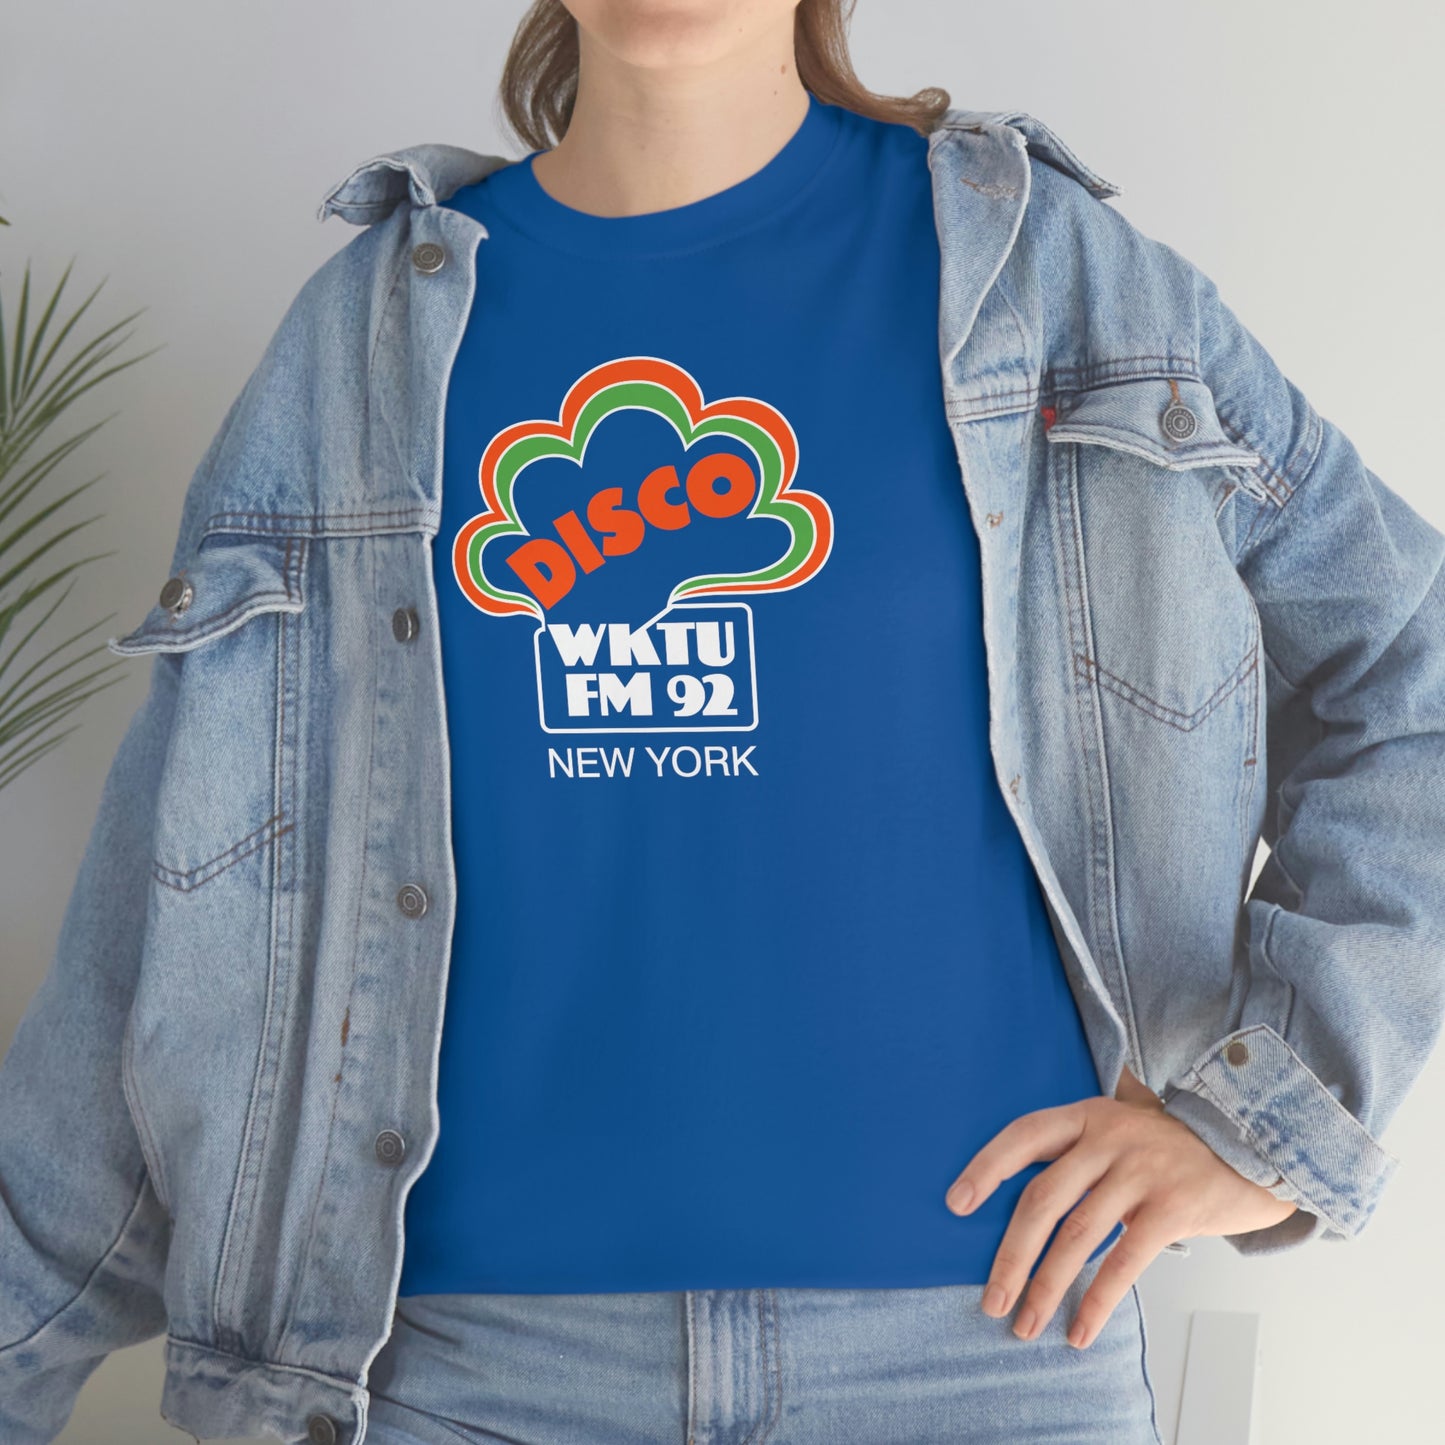 WKTU FM 92 New York Disco T-Shirt